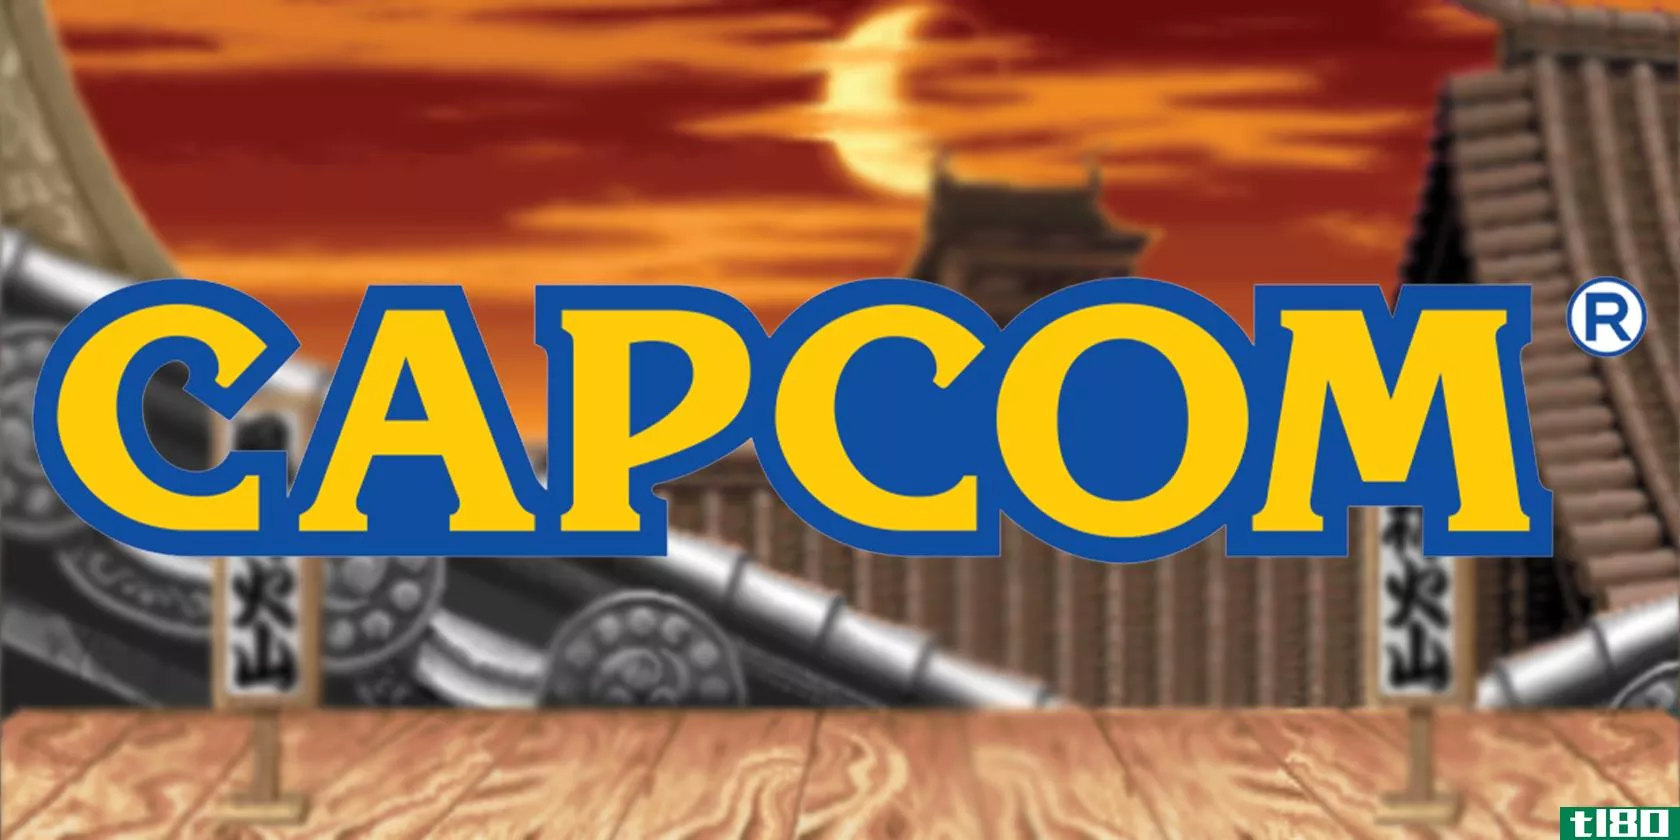 capcom logo on street fighter classic background